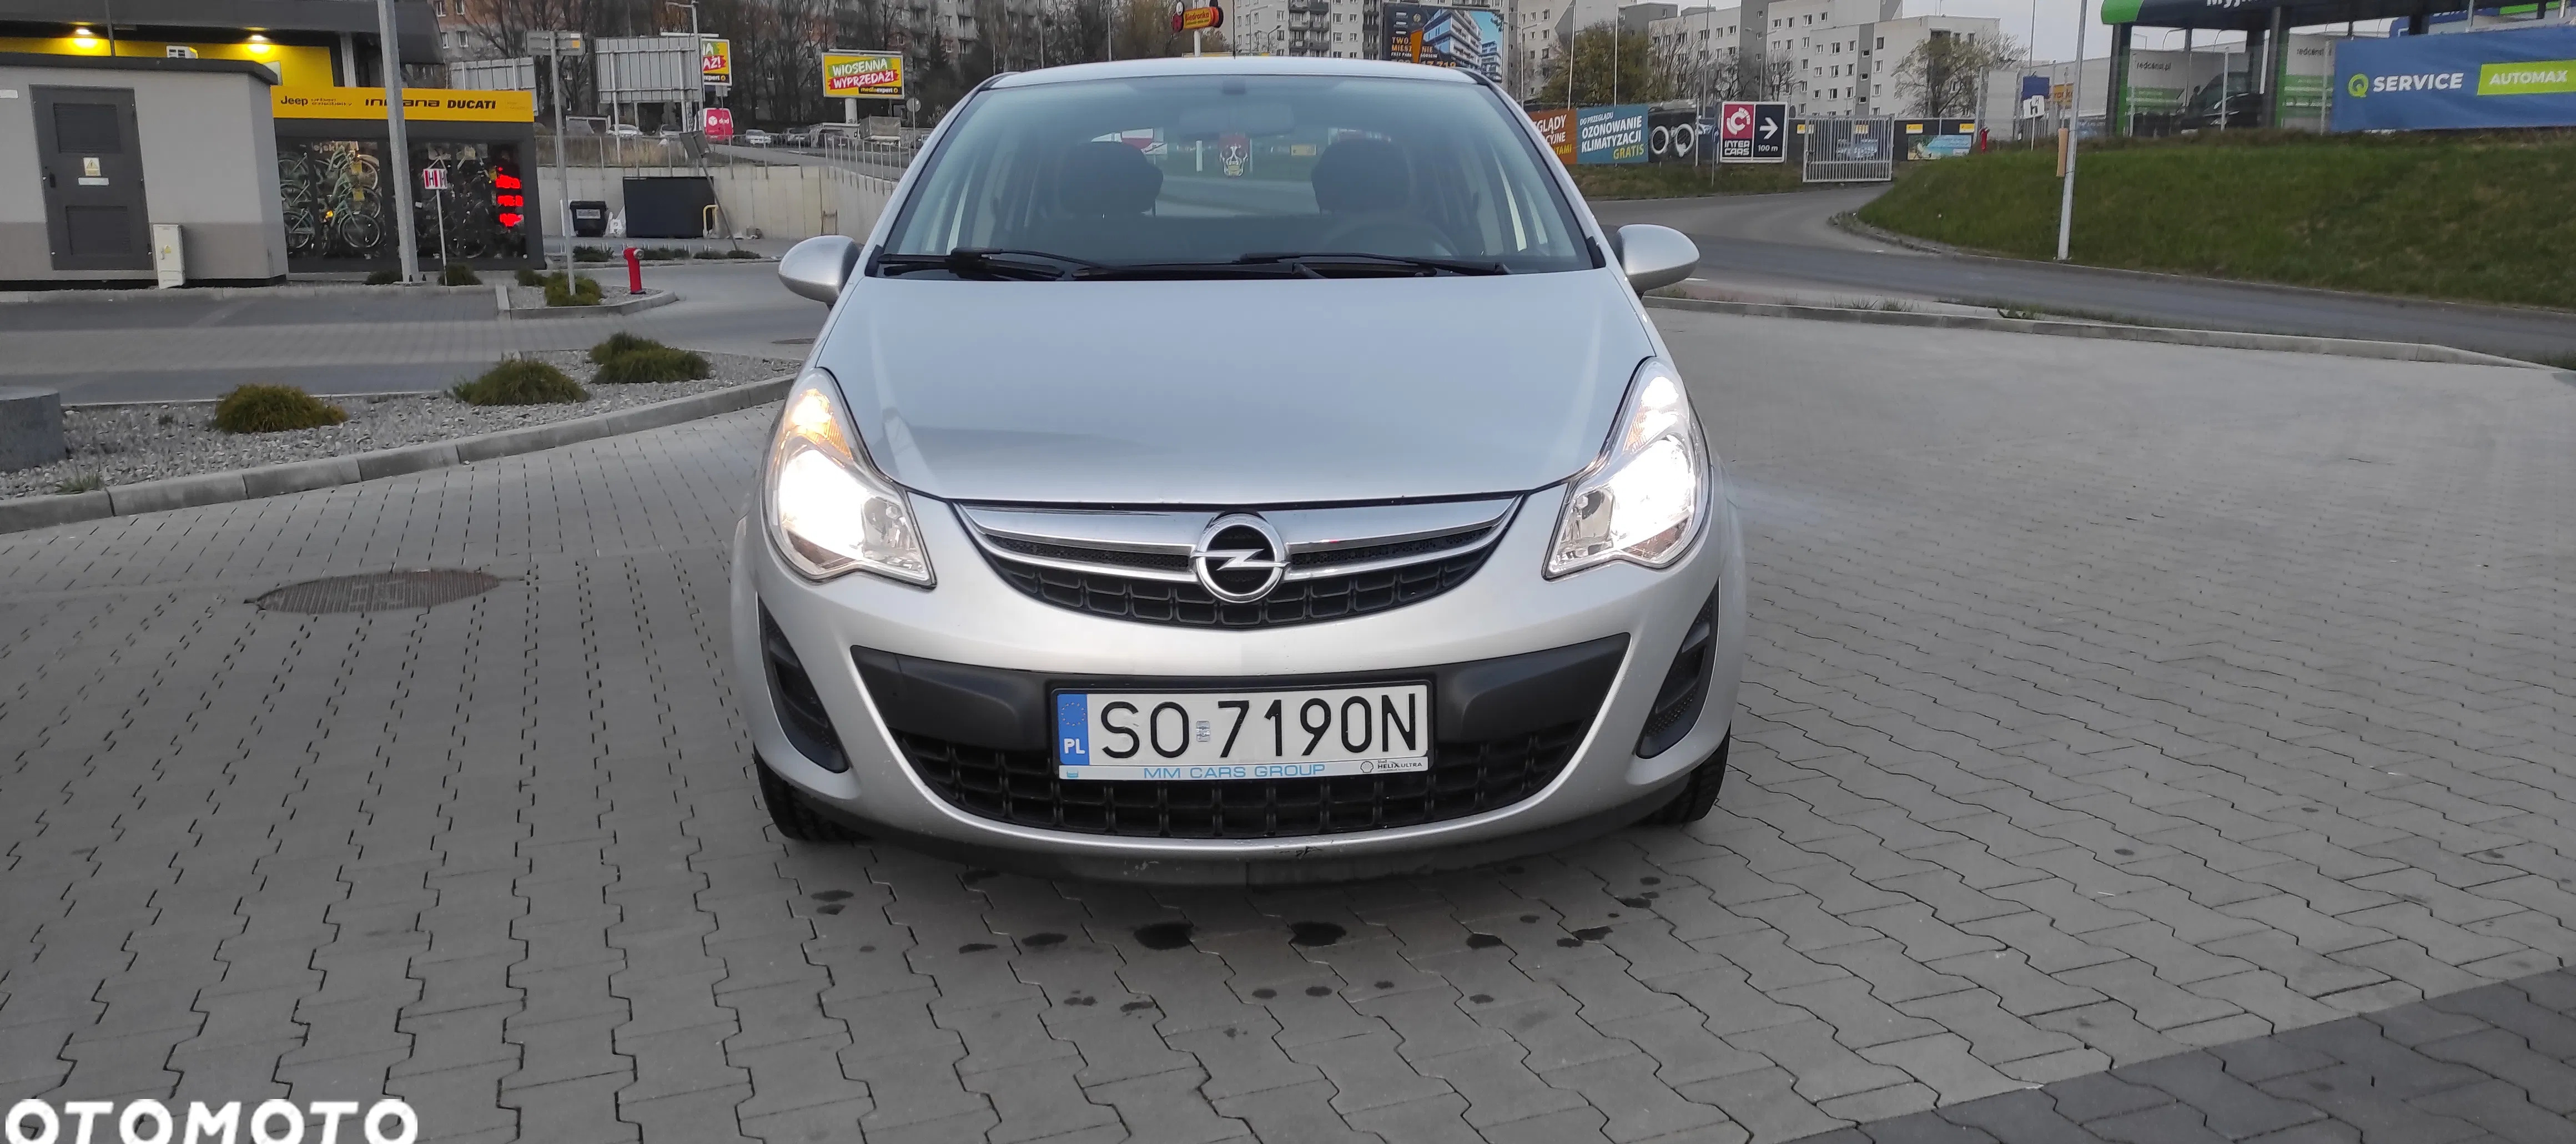 opel Opel Corsa cena 18770 przebieg: 169215, rok produkcji 2011 z Sosnowiec